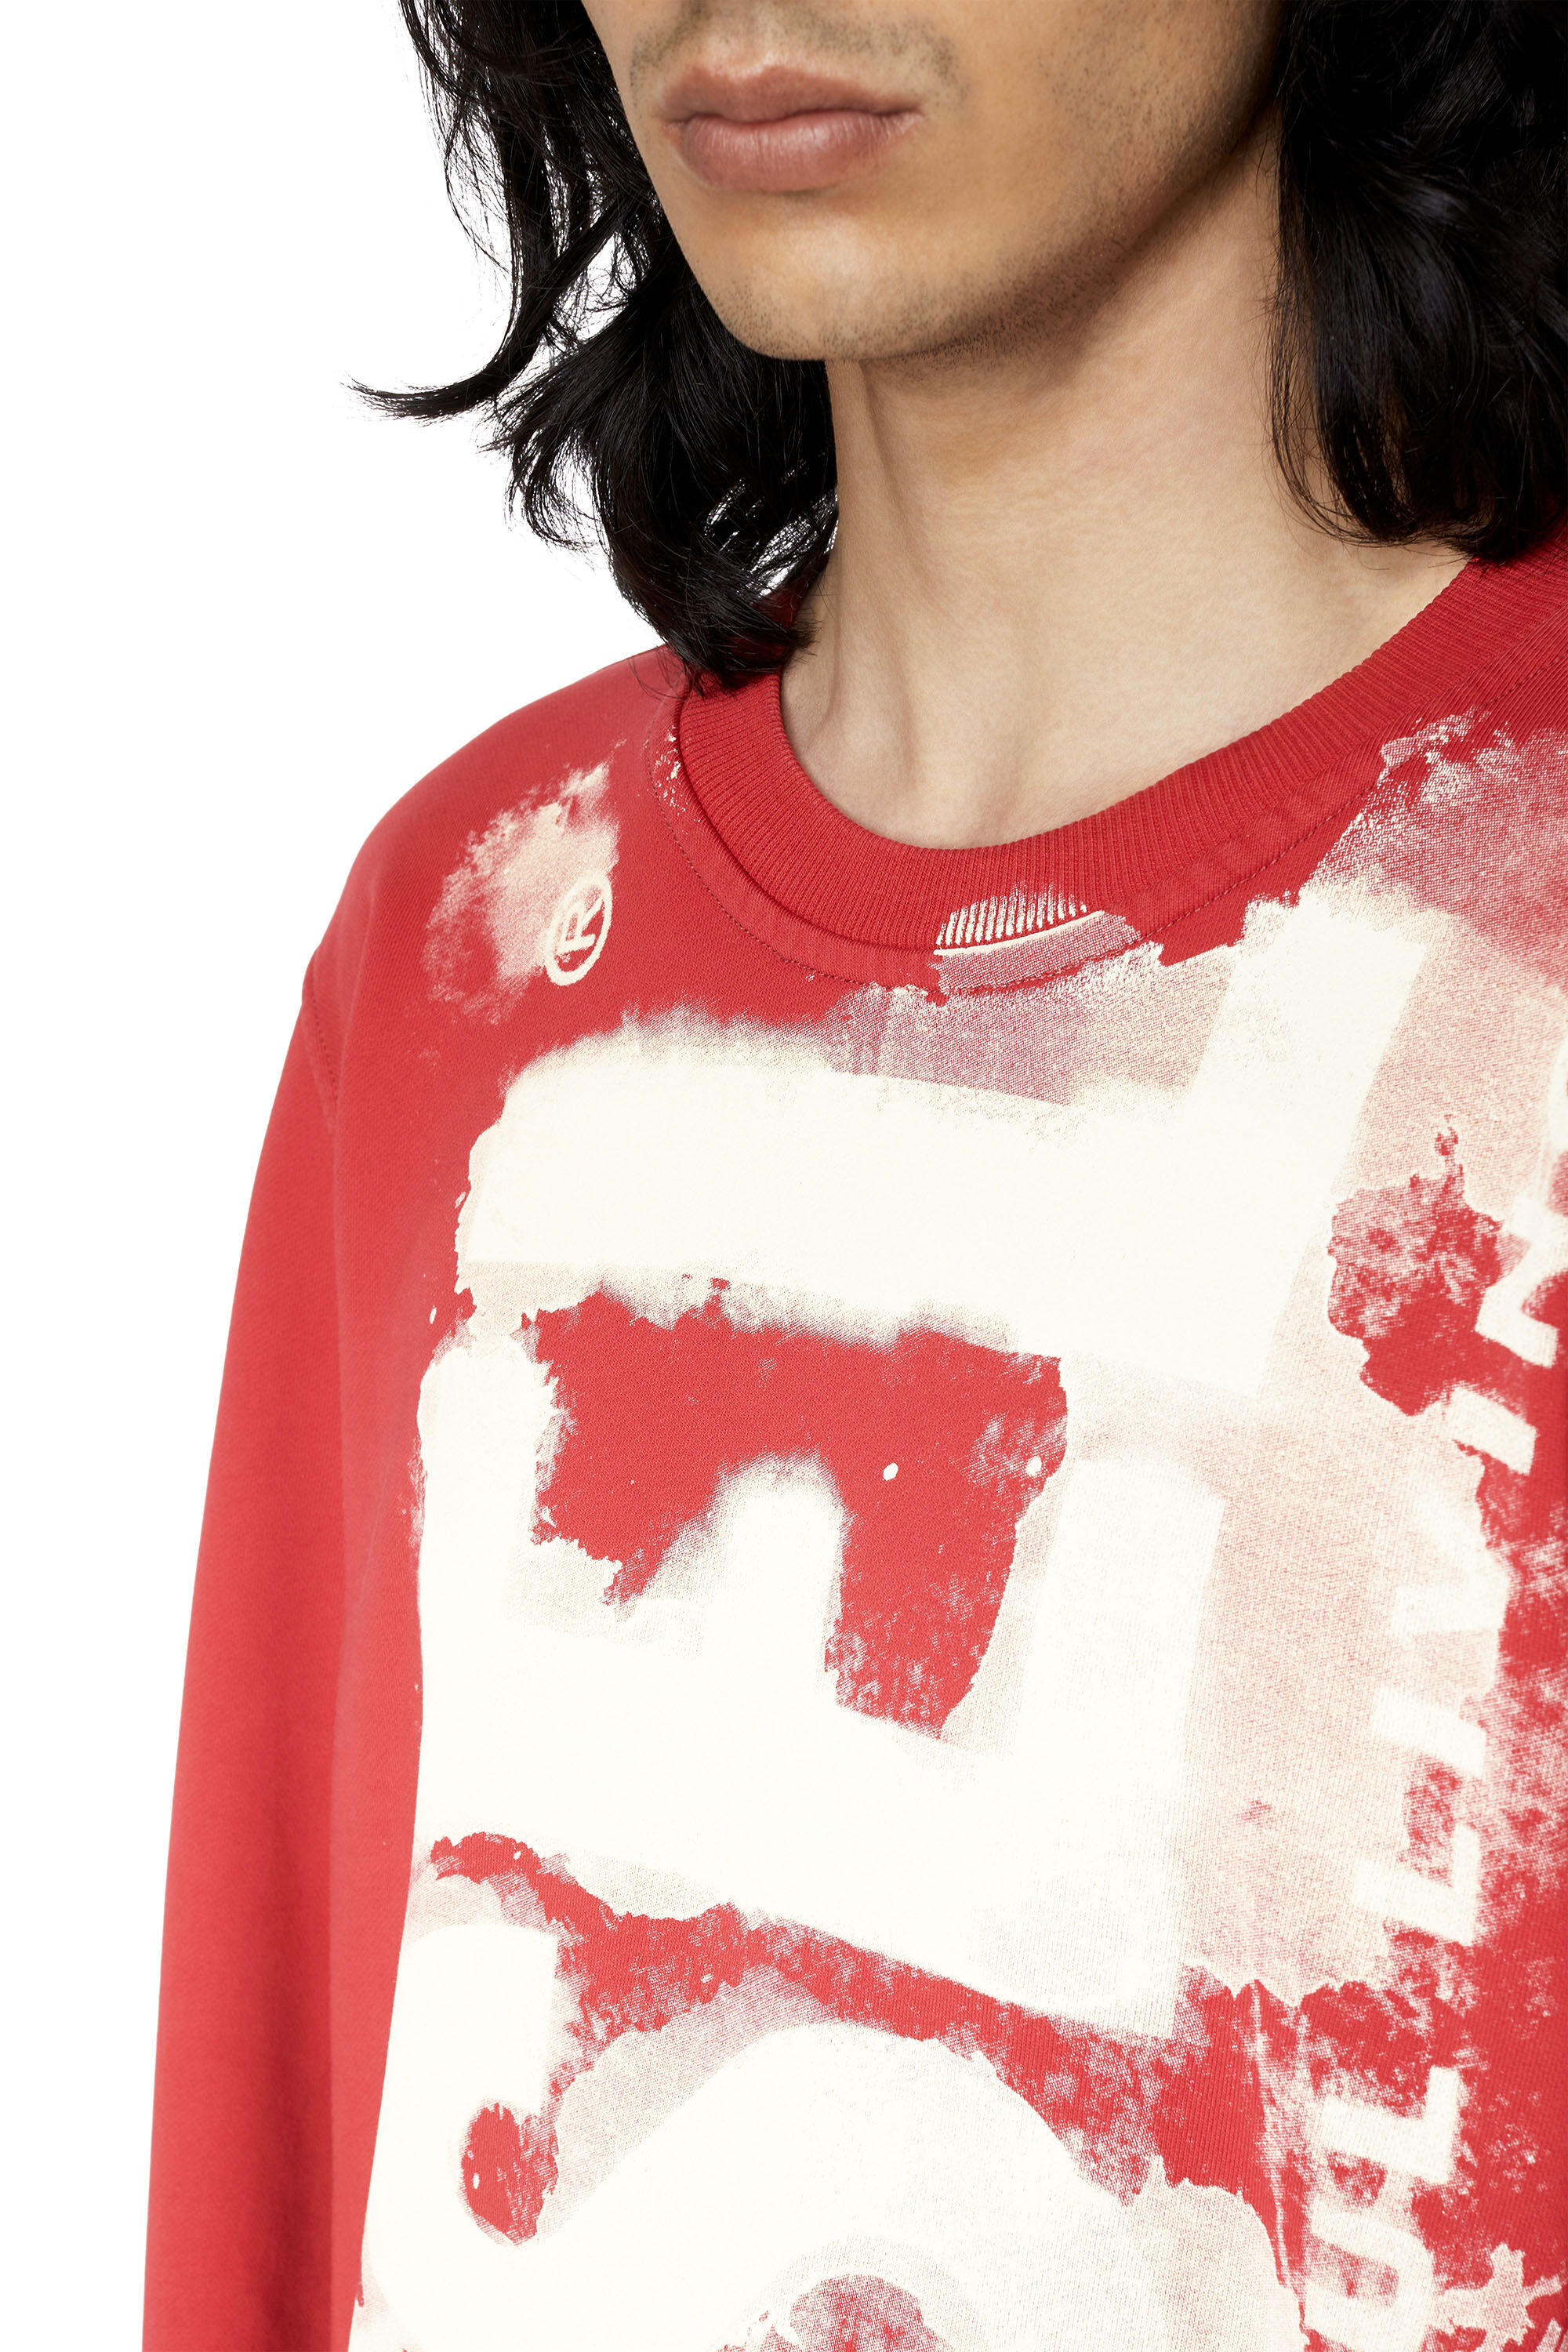 S-GINN-E5 Man: Sweatshirt with bleeding-effect logo | Diesel